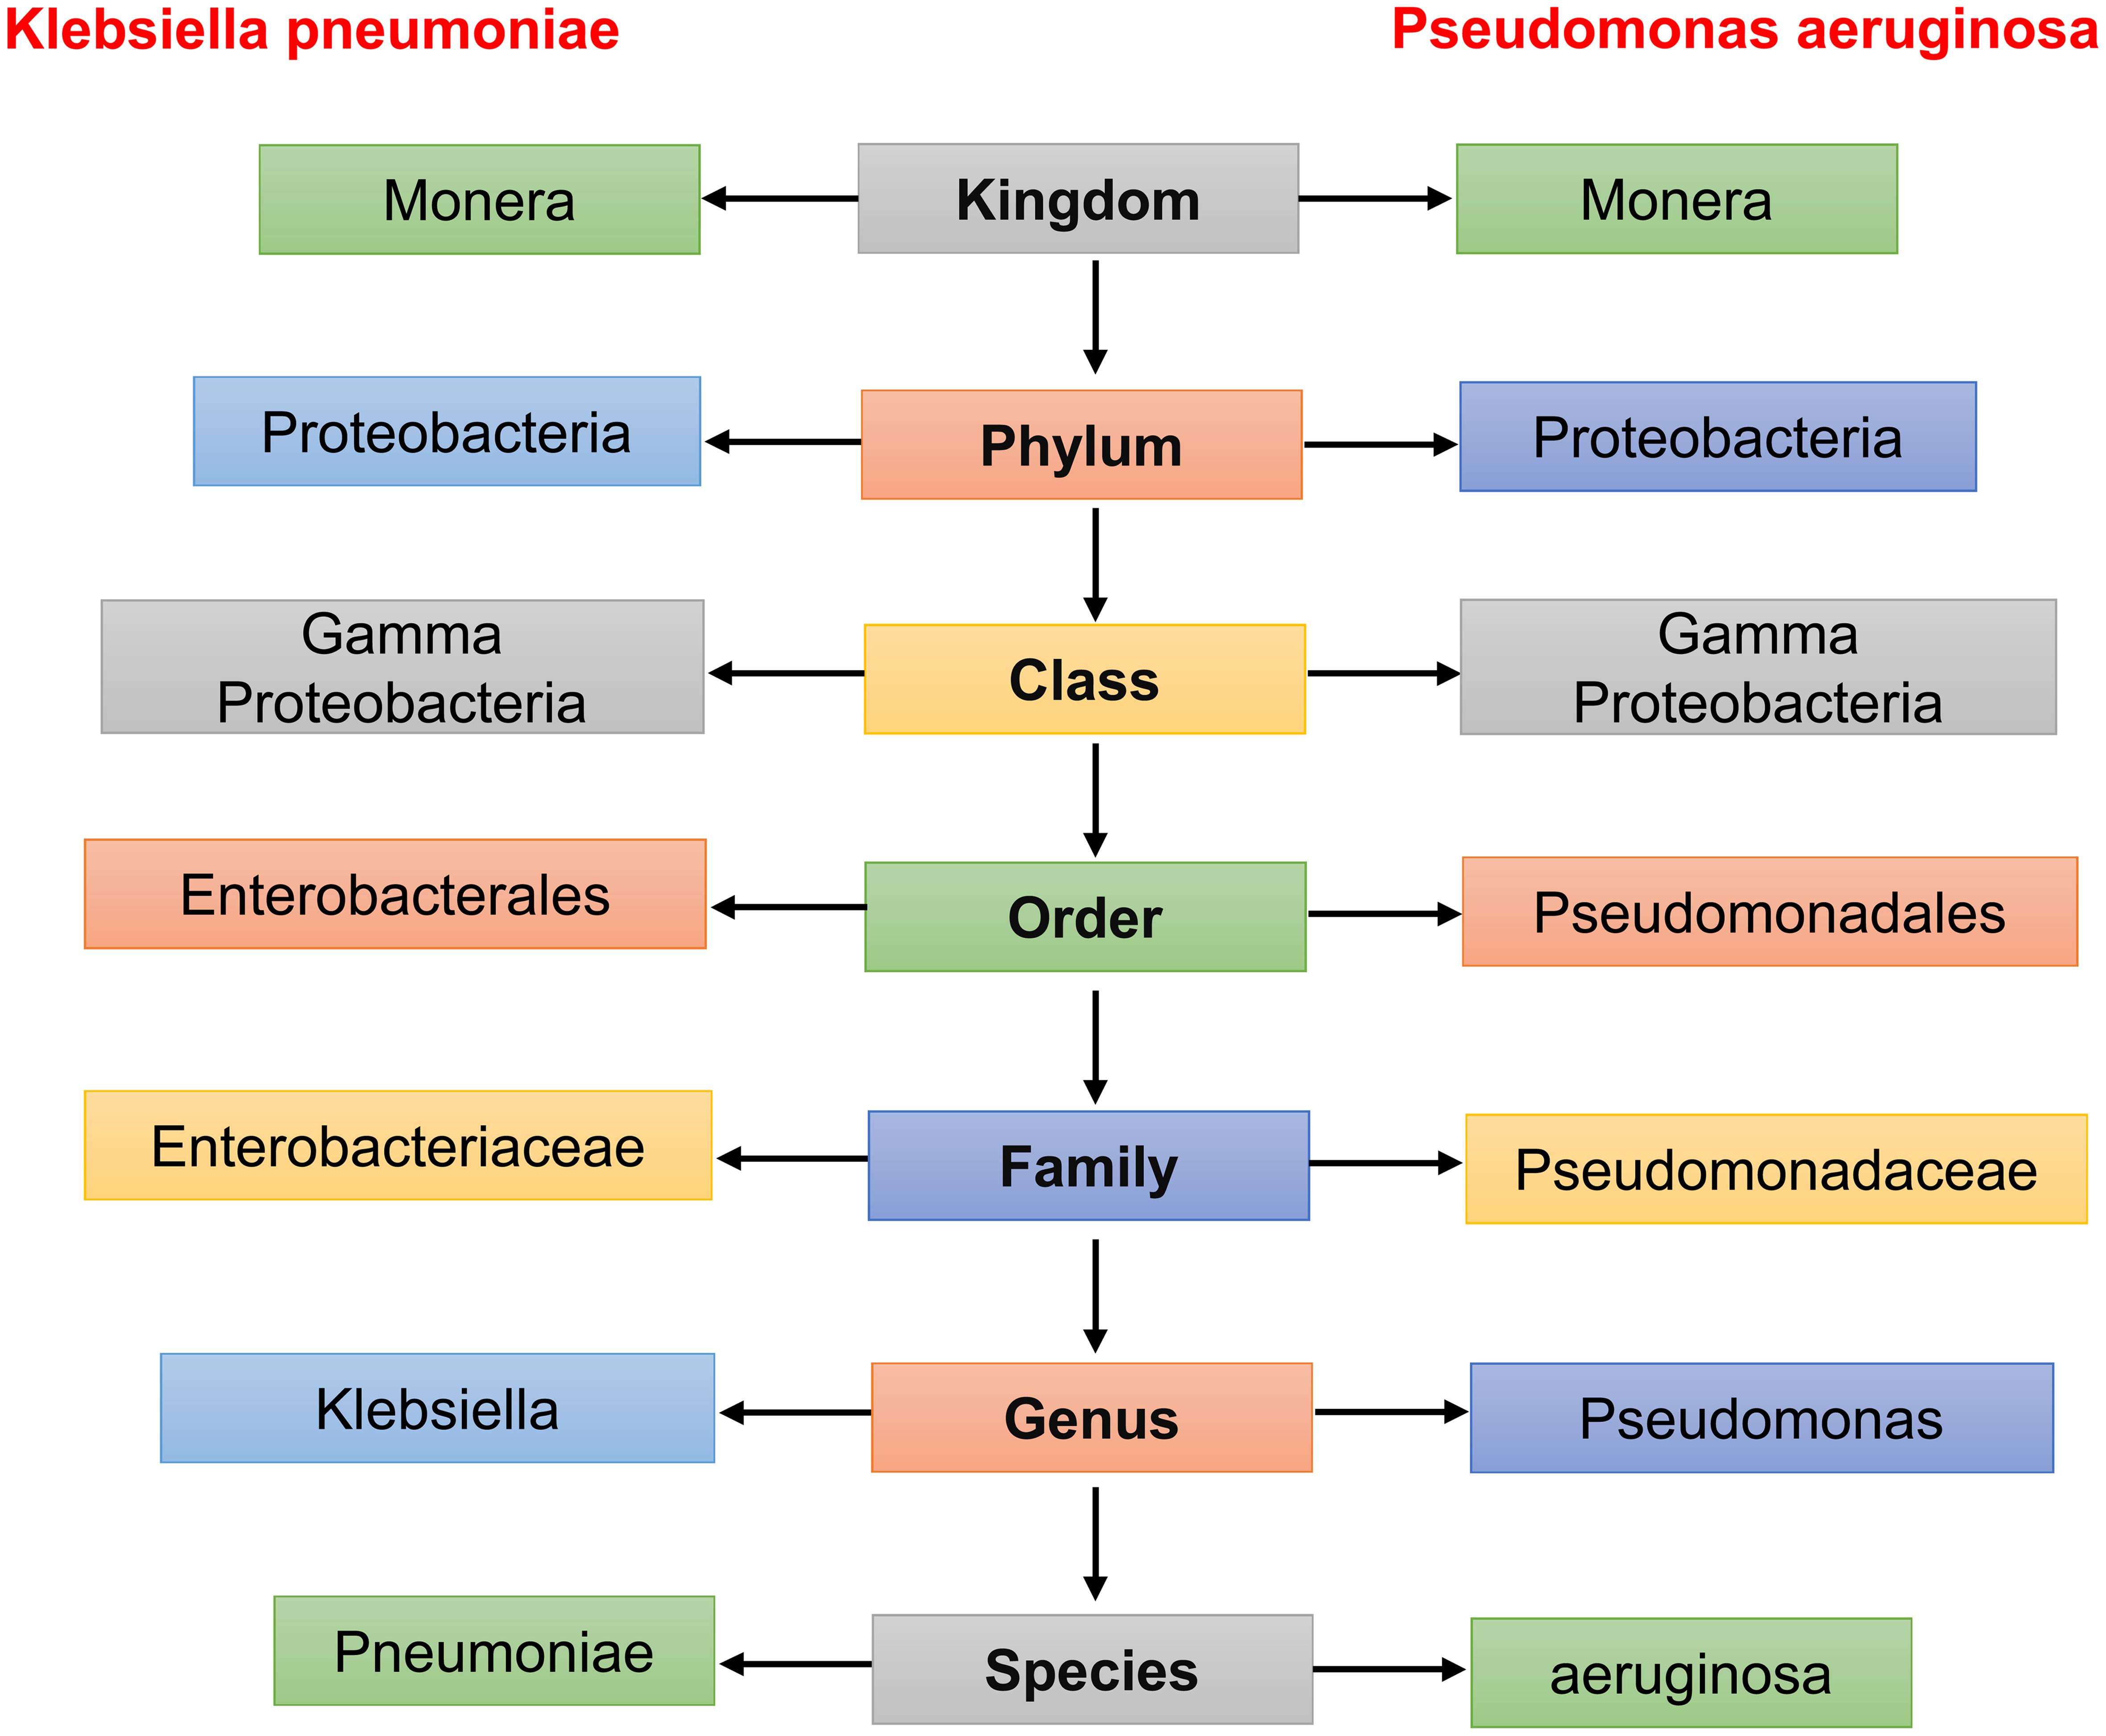 Classification of <italic>Klebsiella pneumonia</italic> and <italic>Pseudomonas aeruginosa</italic>.